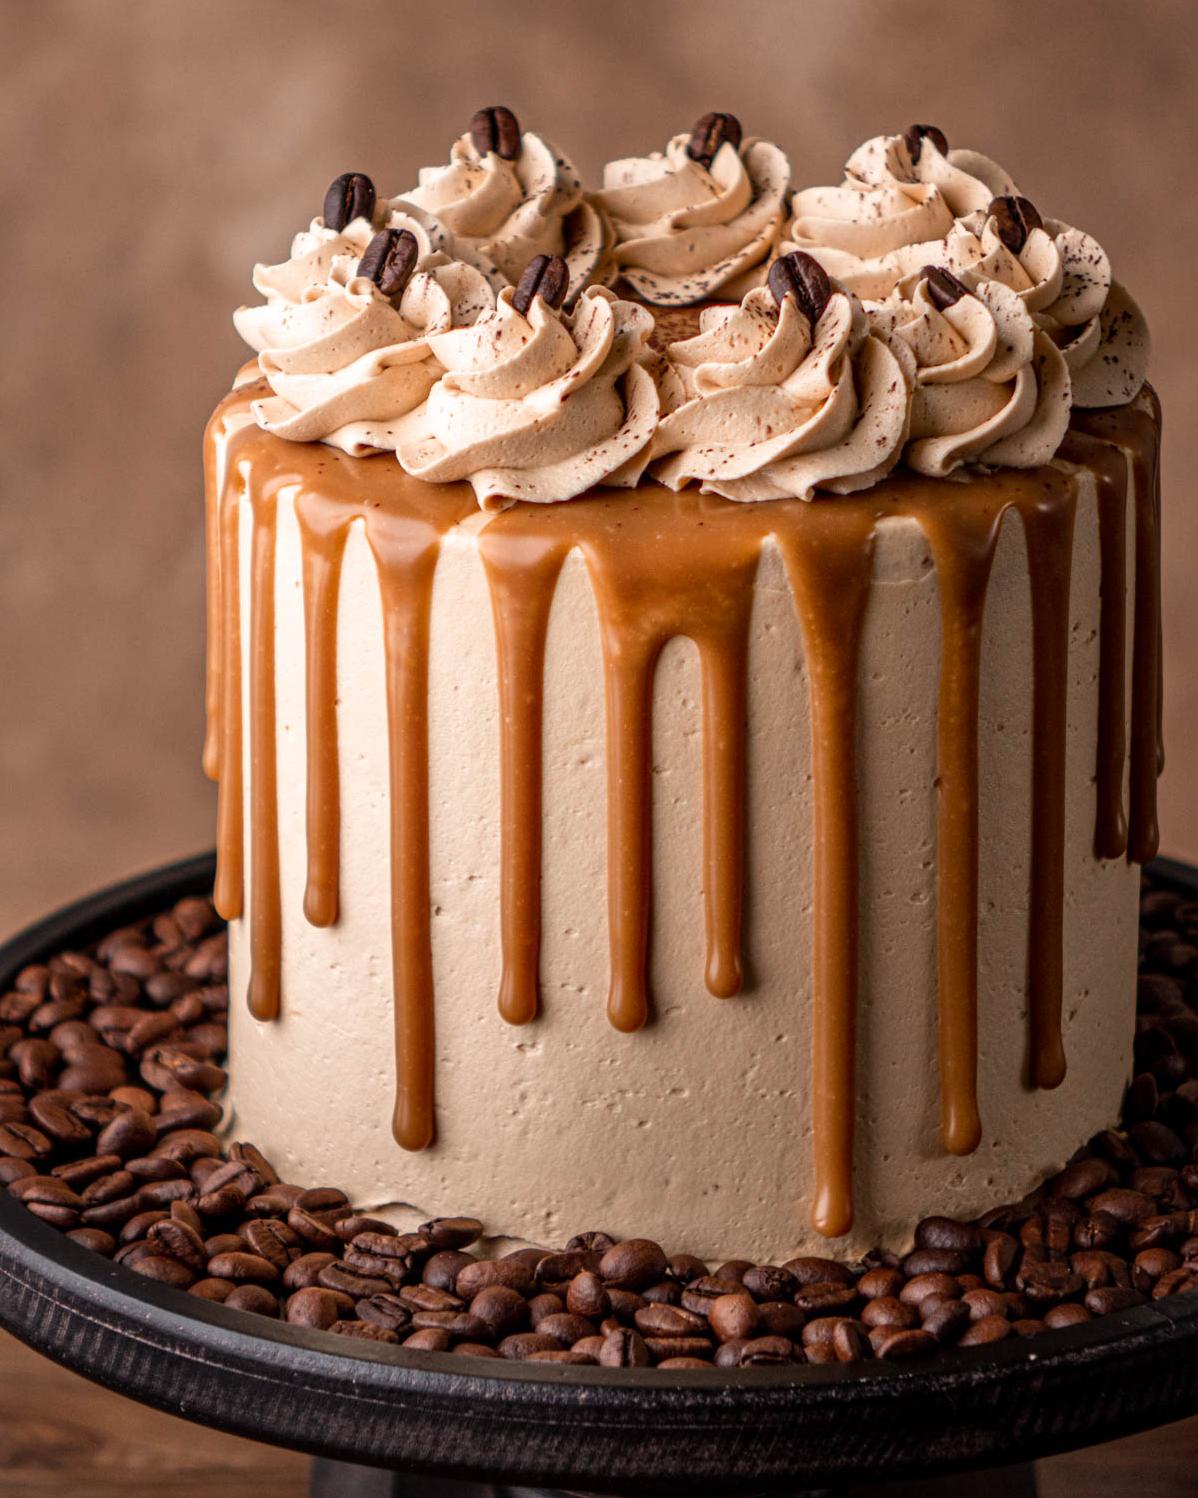  Who needs to go to a café when you can make this delicious cappuccino cake at home?